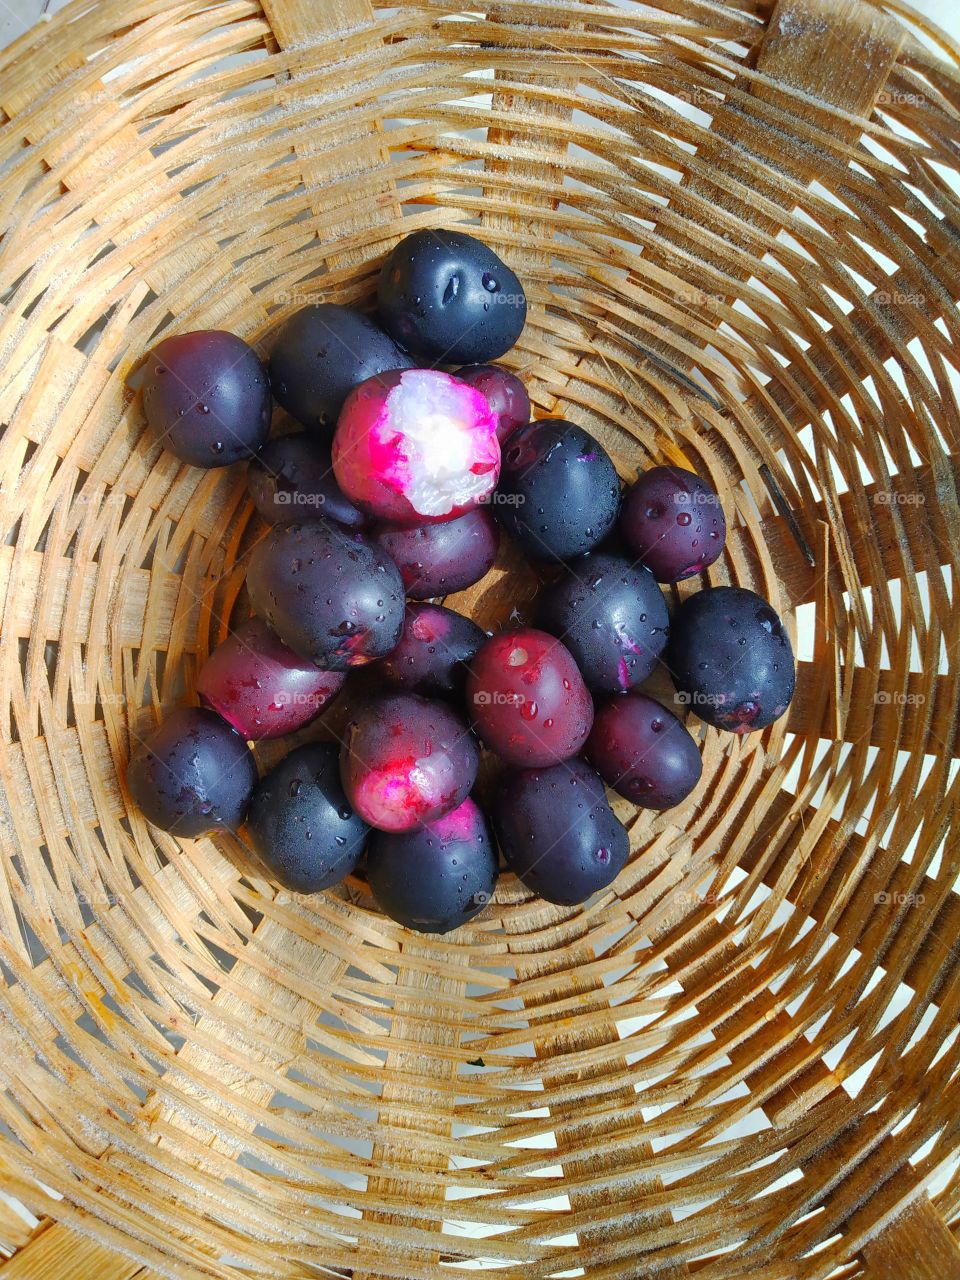 Black berry jamun